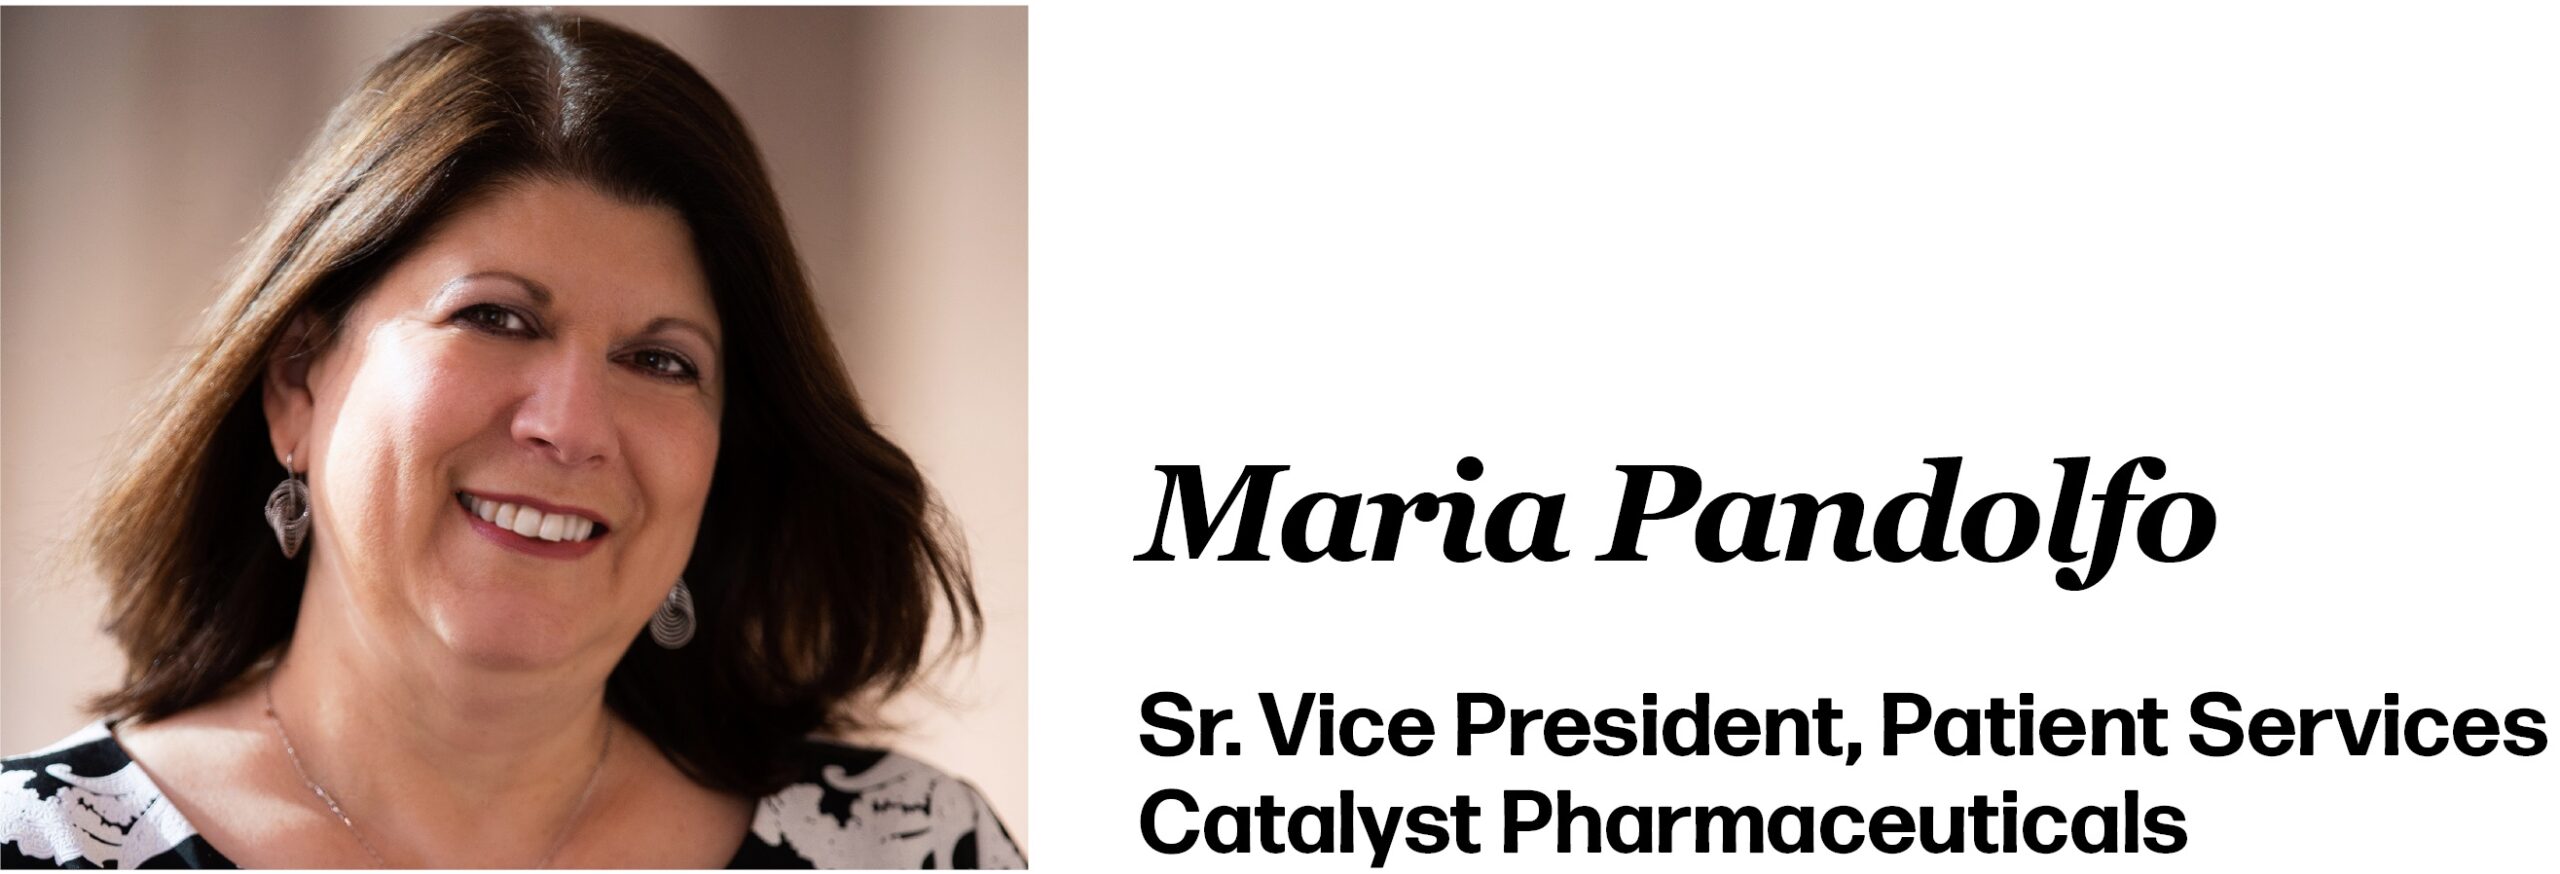 Maria Pandolfo Sr. Vice President, Patient Services Catalyst Pharmaceuticals